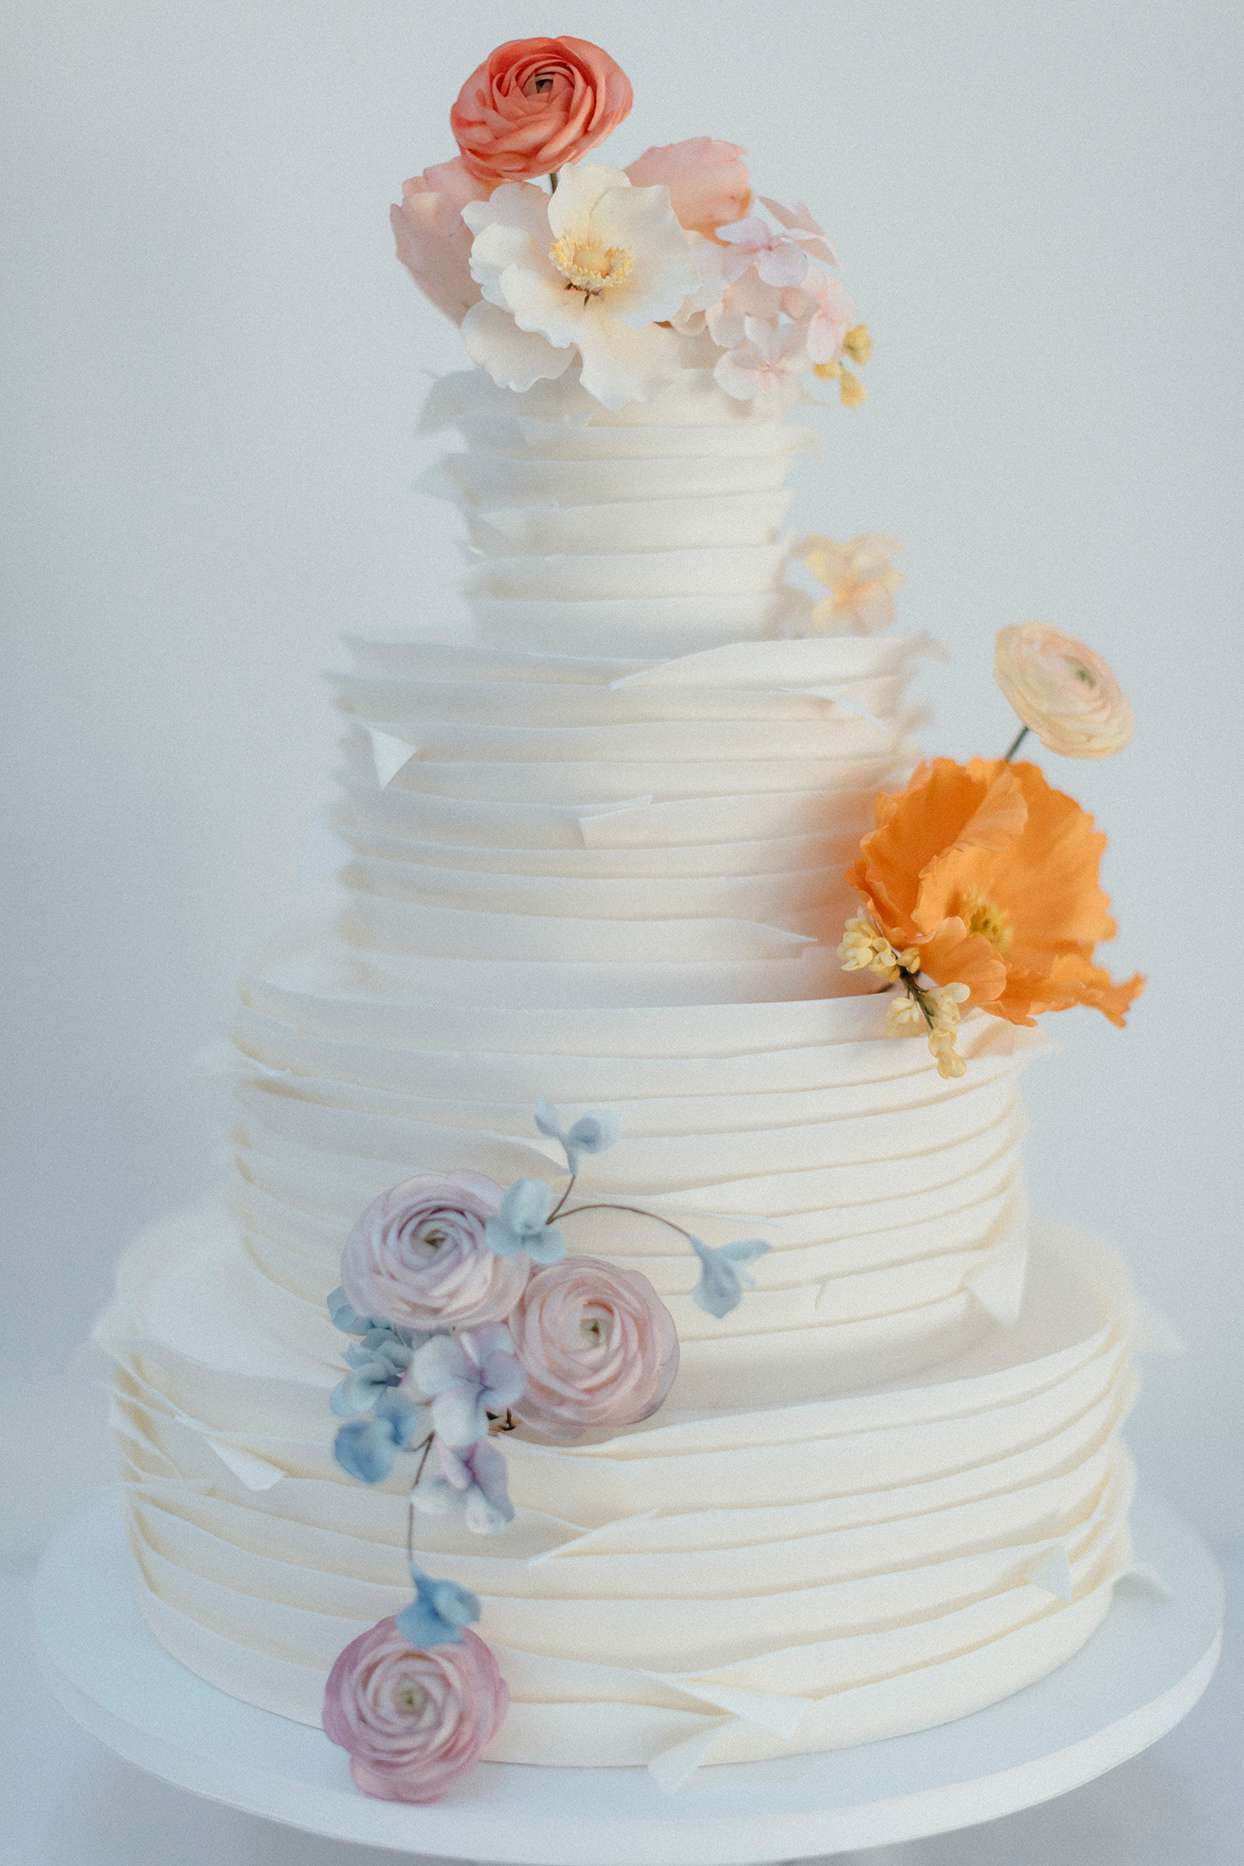 kristen jonathan modern wedding cake with flowers